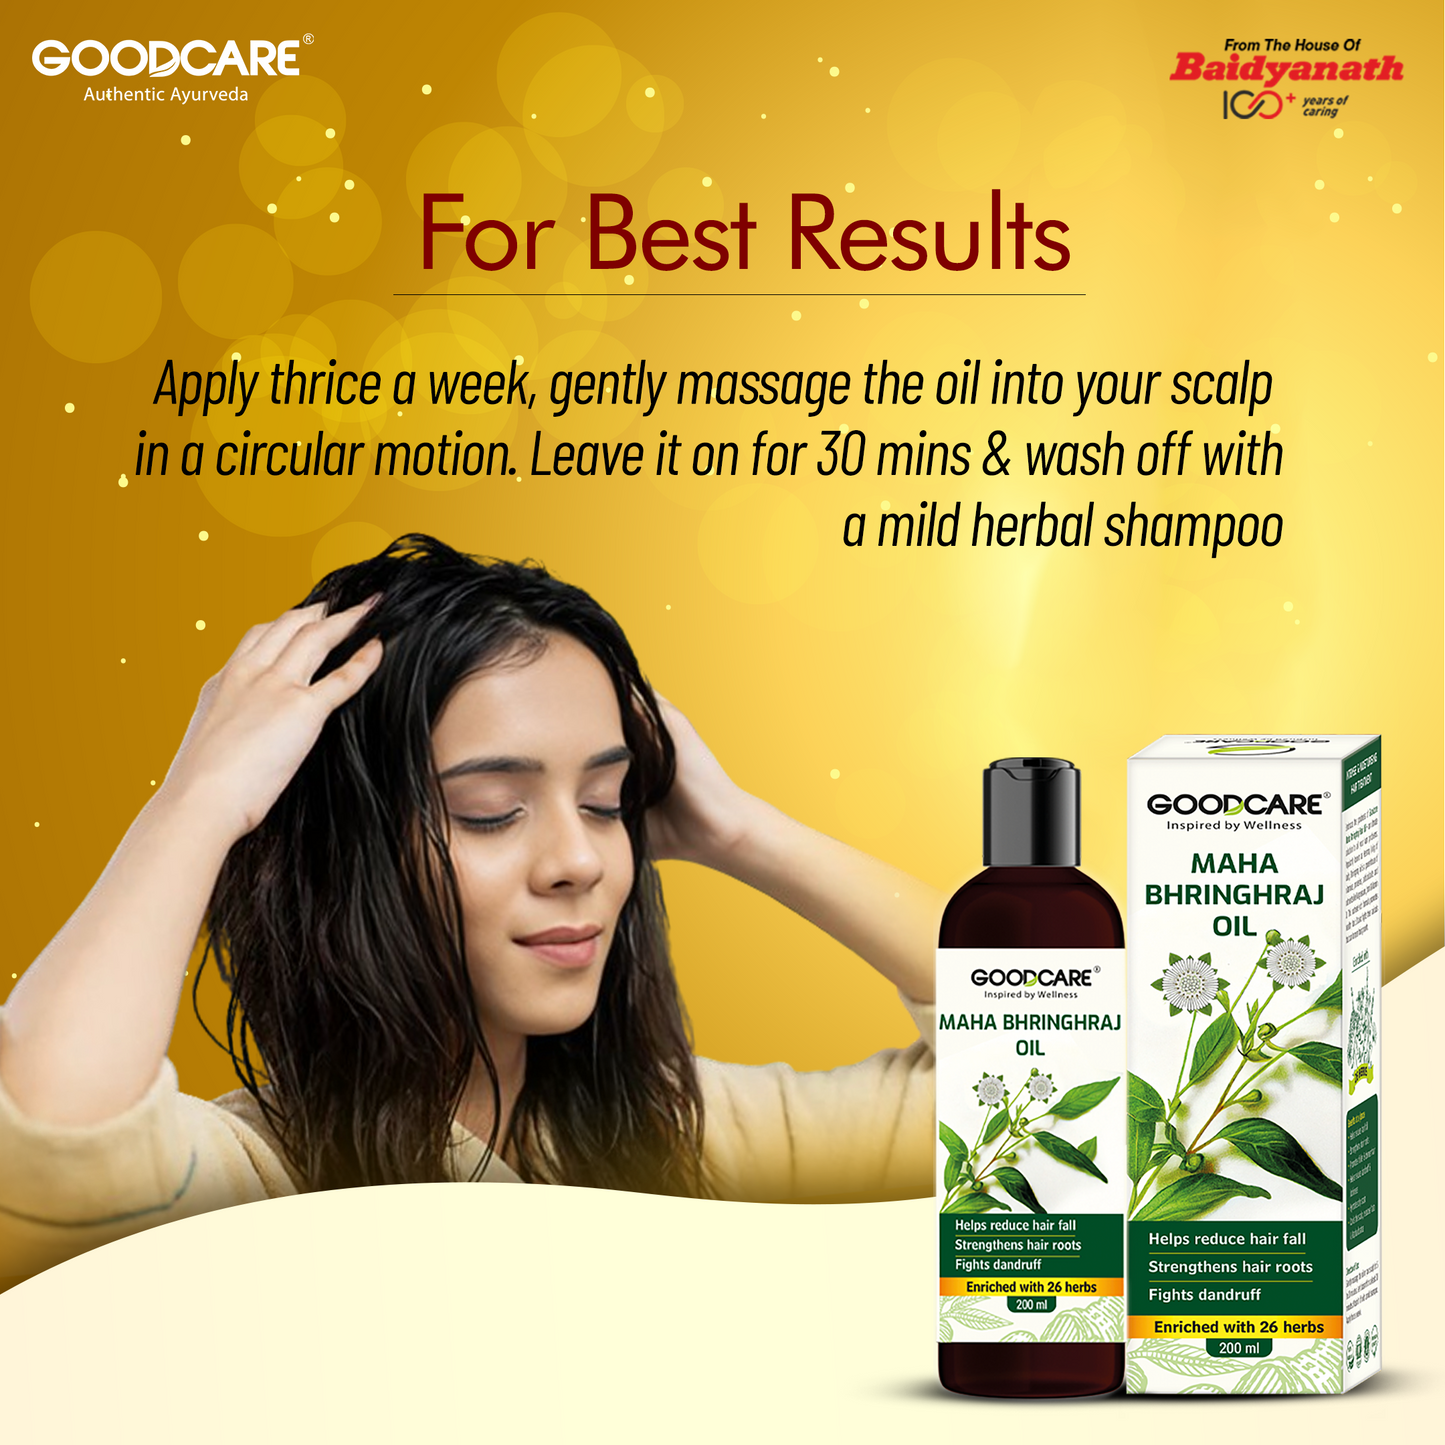 GOODCARE Mahabhringraj Oil | Helps in Hair Growth and Hair Fall Control | Anti Dandruff - 200ml